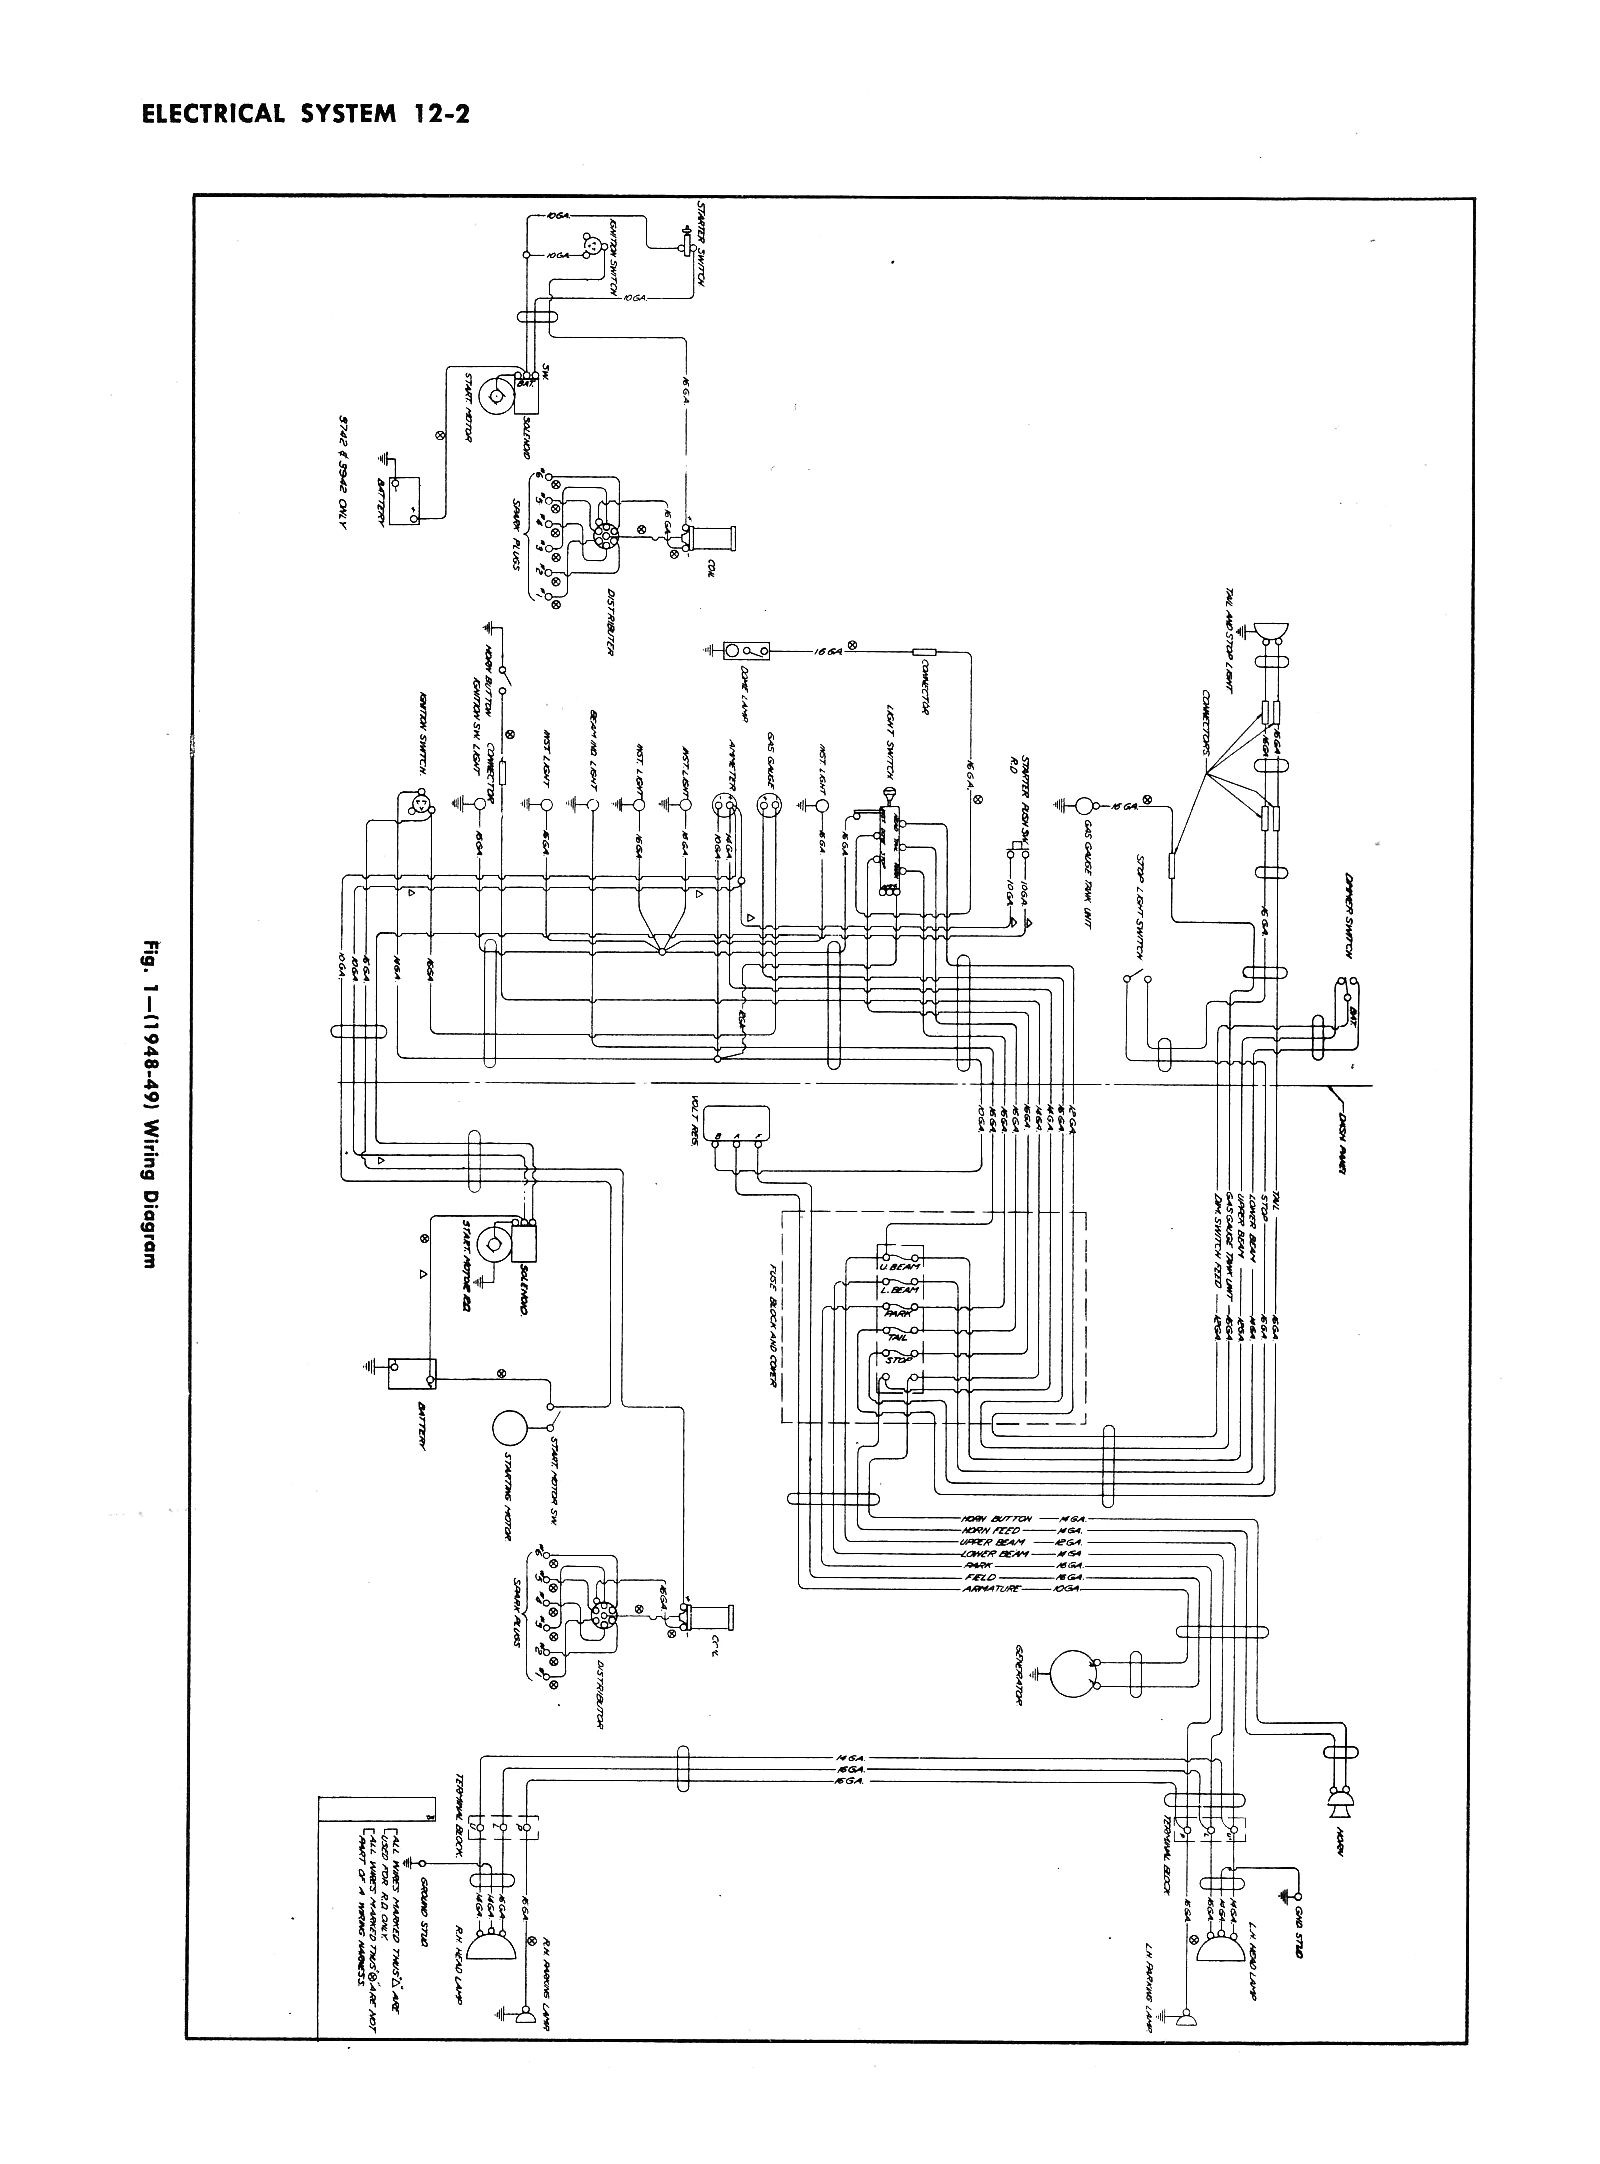 Wiring Manual PDF: 1929 Model A Wiring Diagram